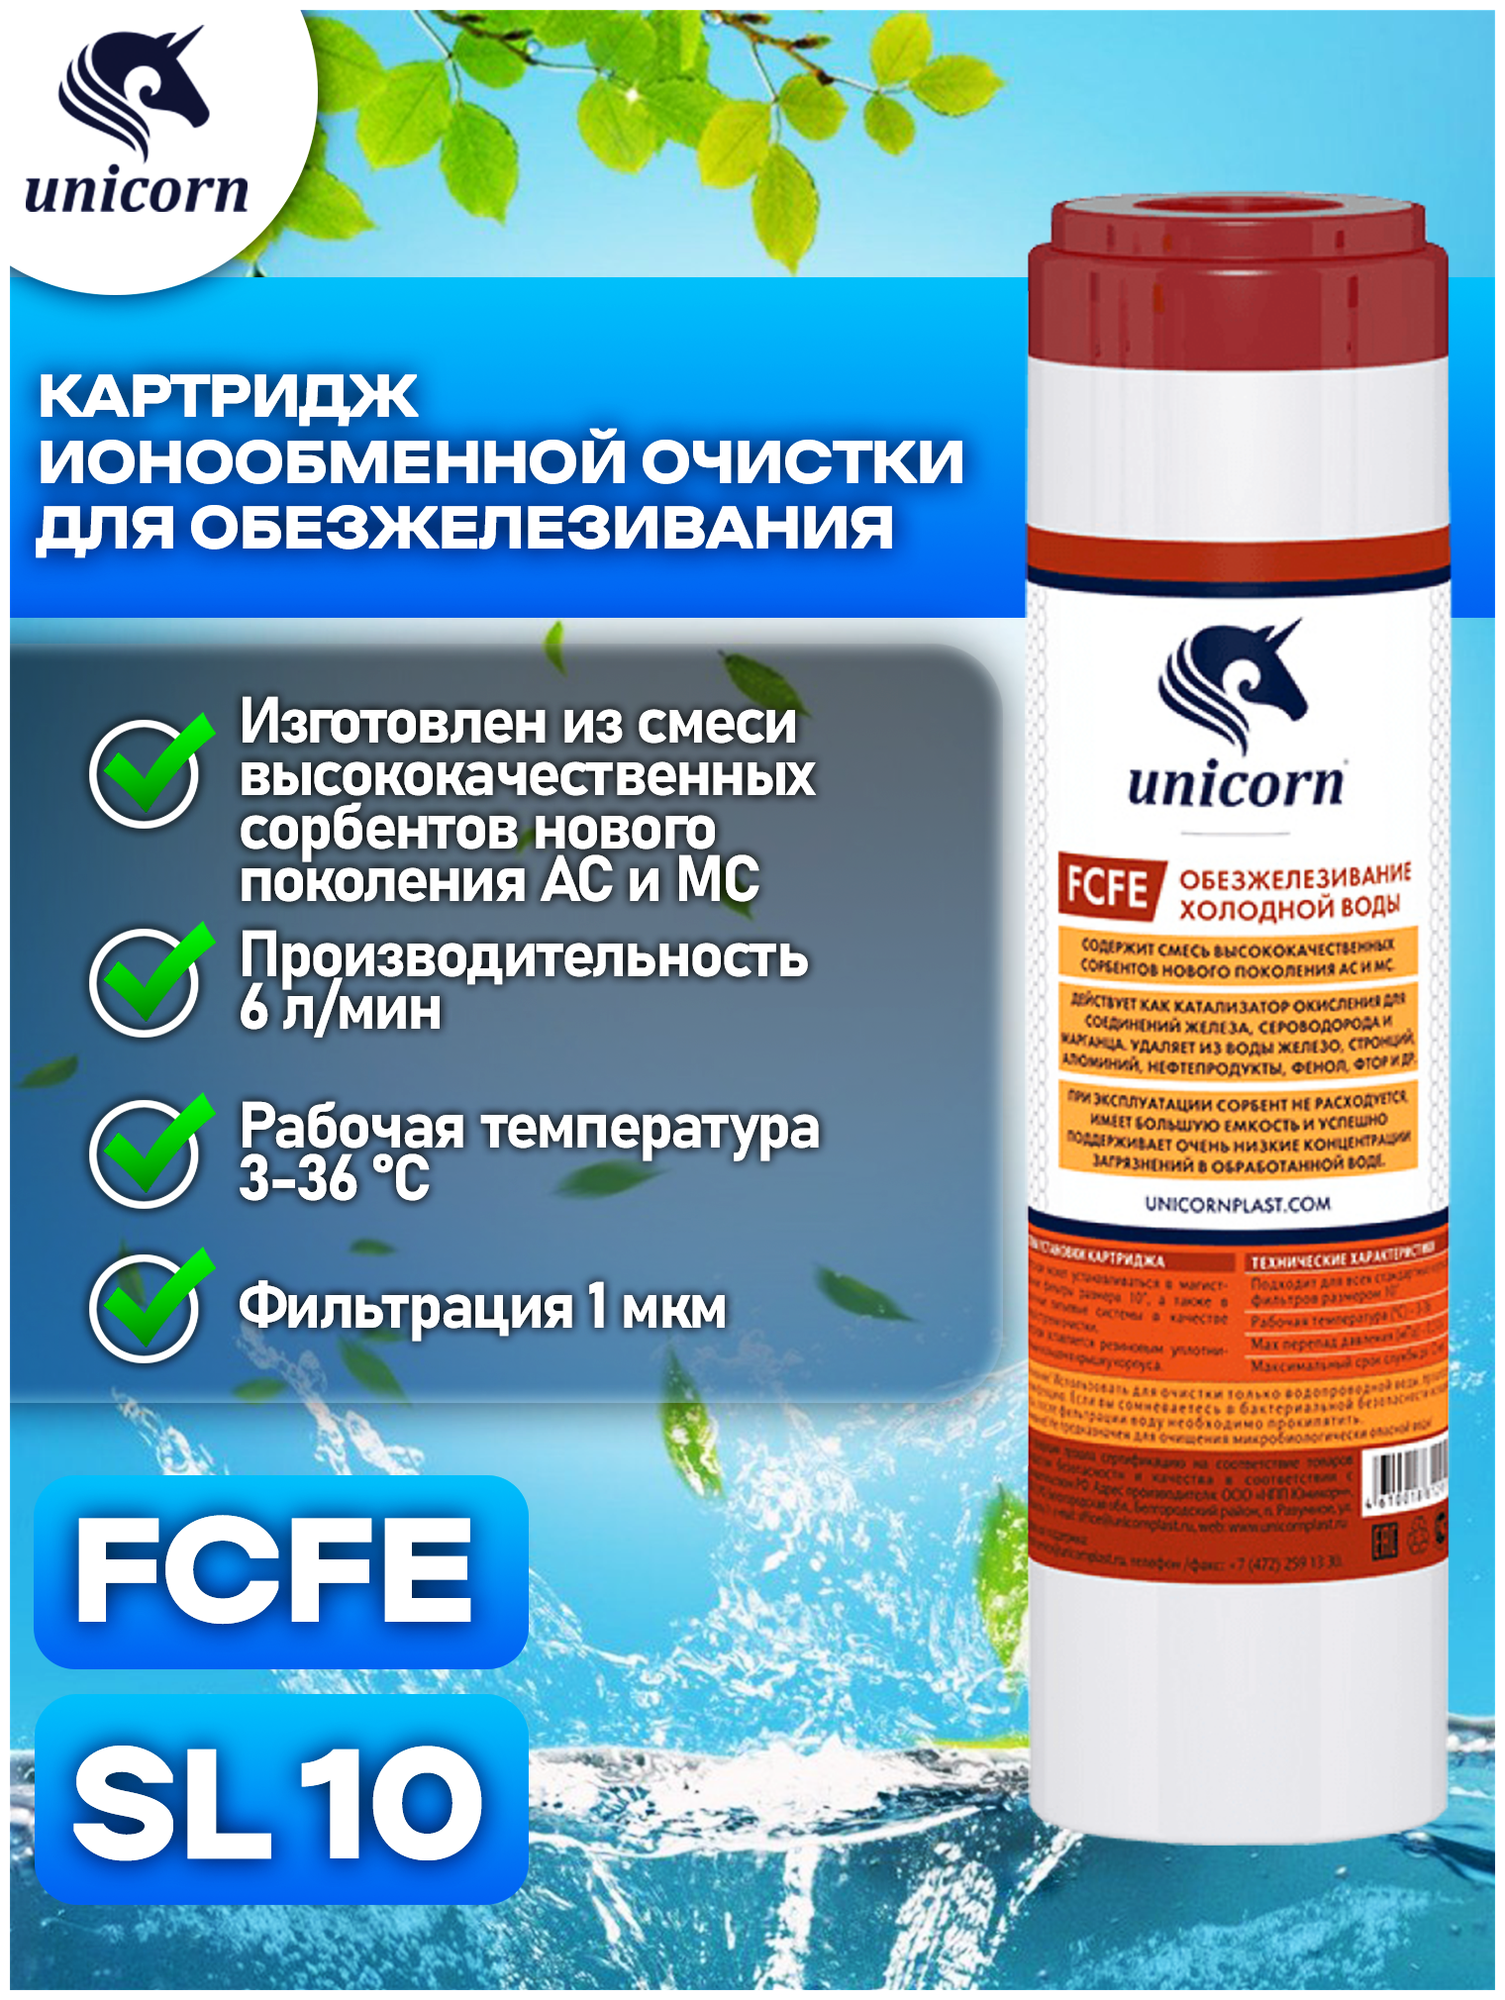 Unicorn Картридж для удаления железа UNICORN FCFE 10" (FCFE10"), 1 шт.